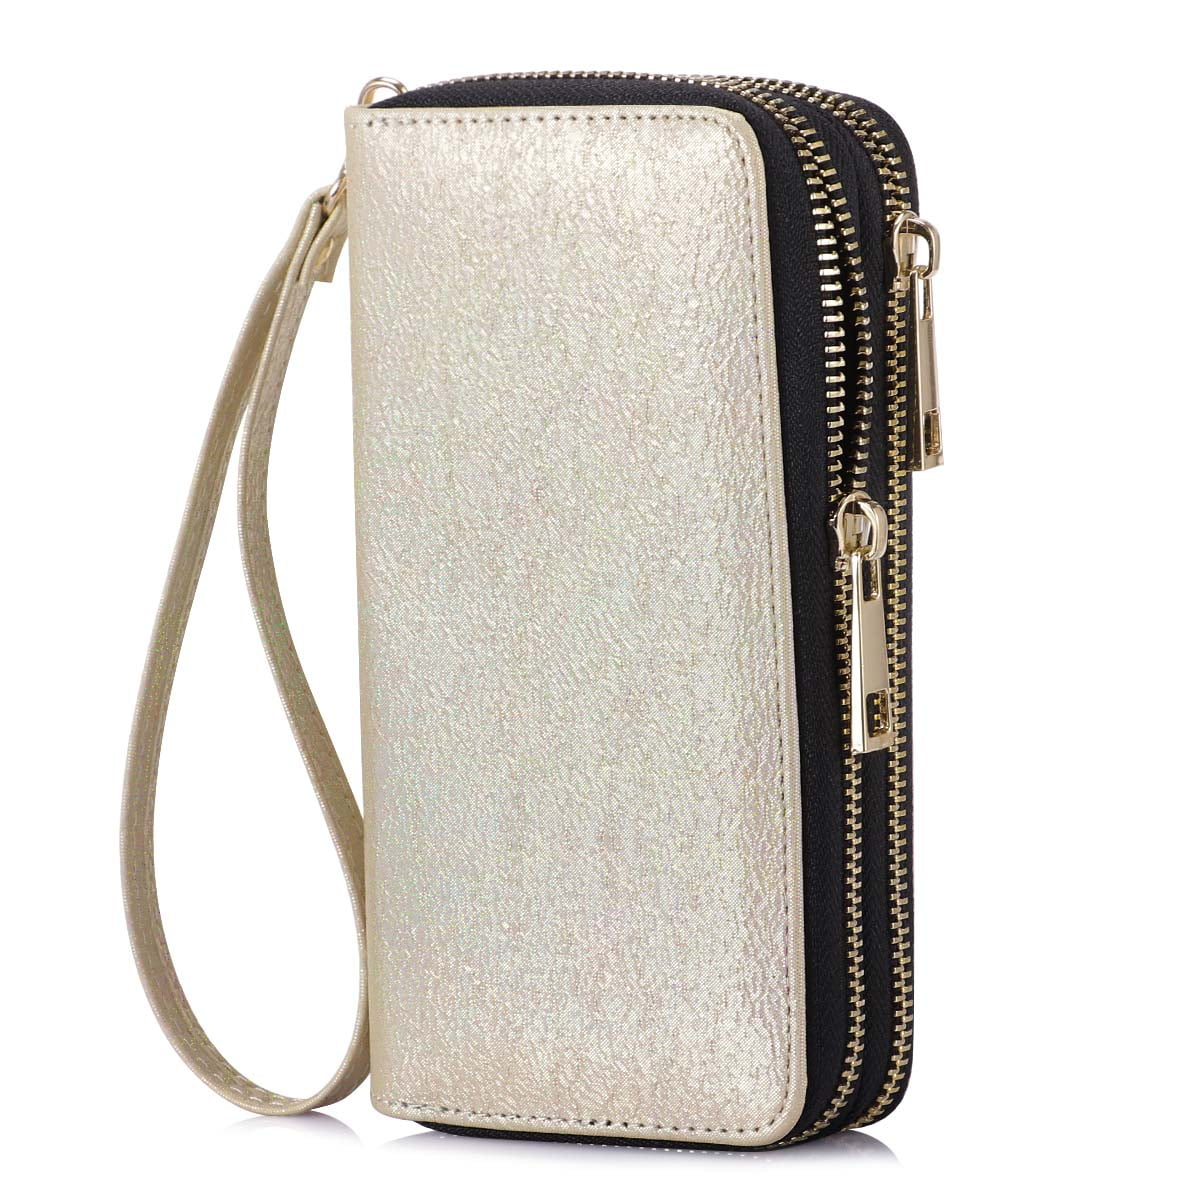 YALUXE Women's Wristlet Handbag Zipper Wallet Cellphone Purse Clutch Genuine Leather Quilted